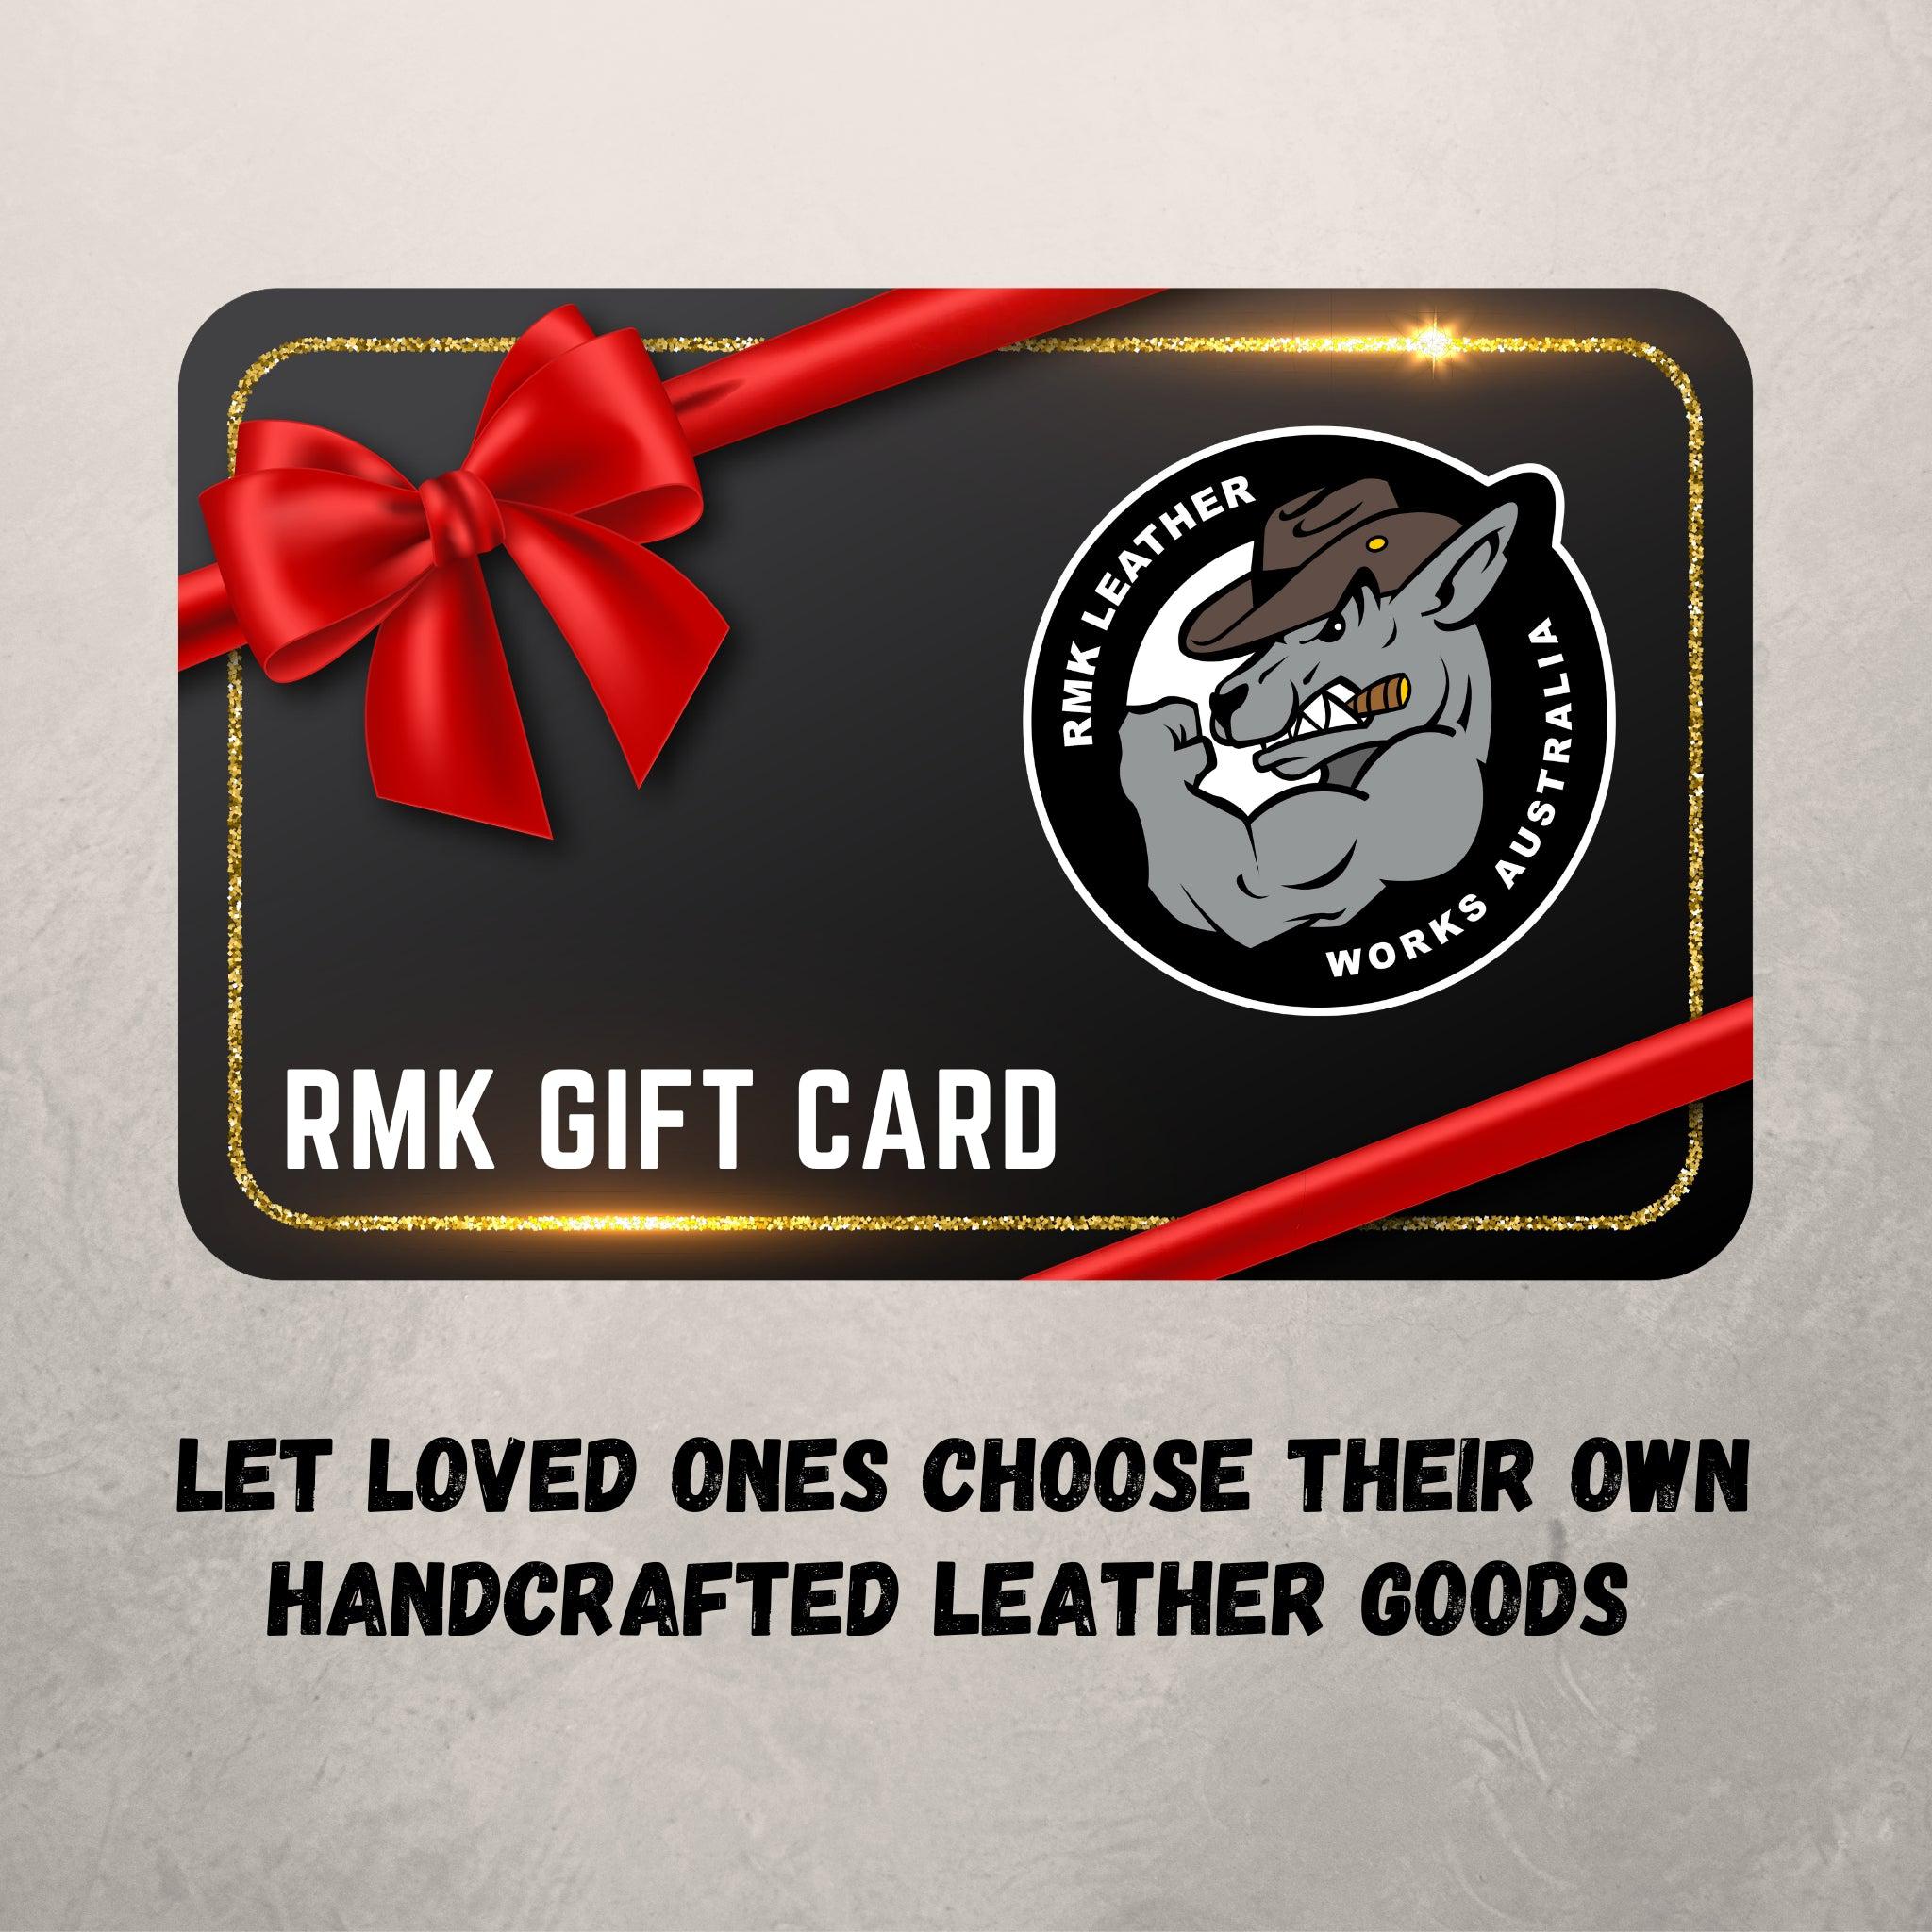 RMK Gift Card $30 - $500